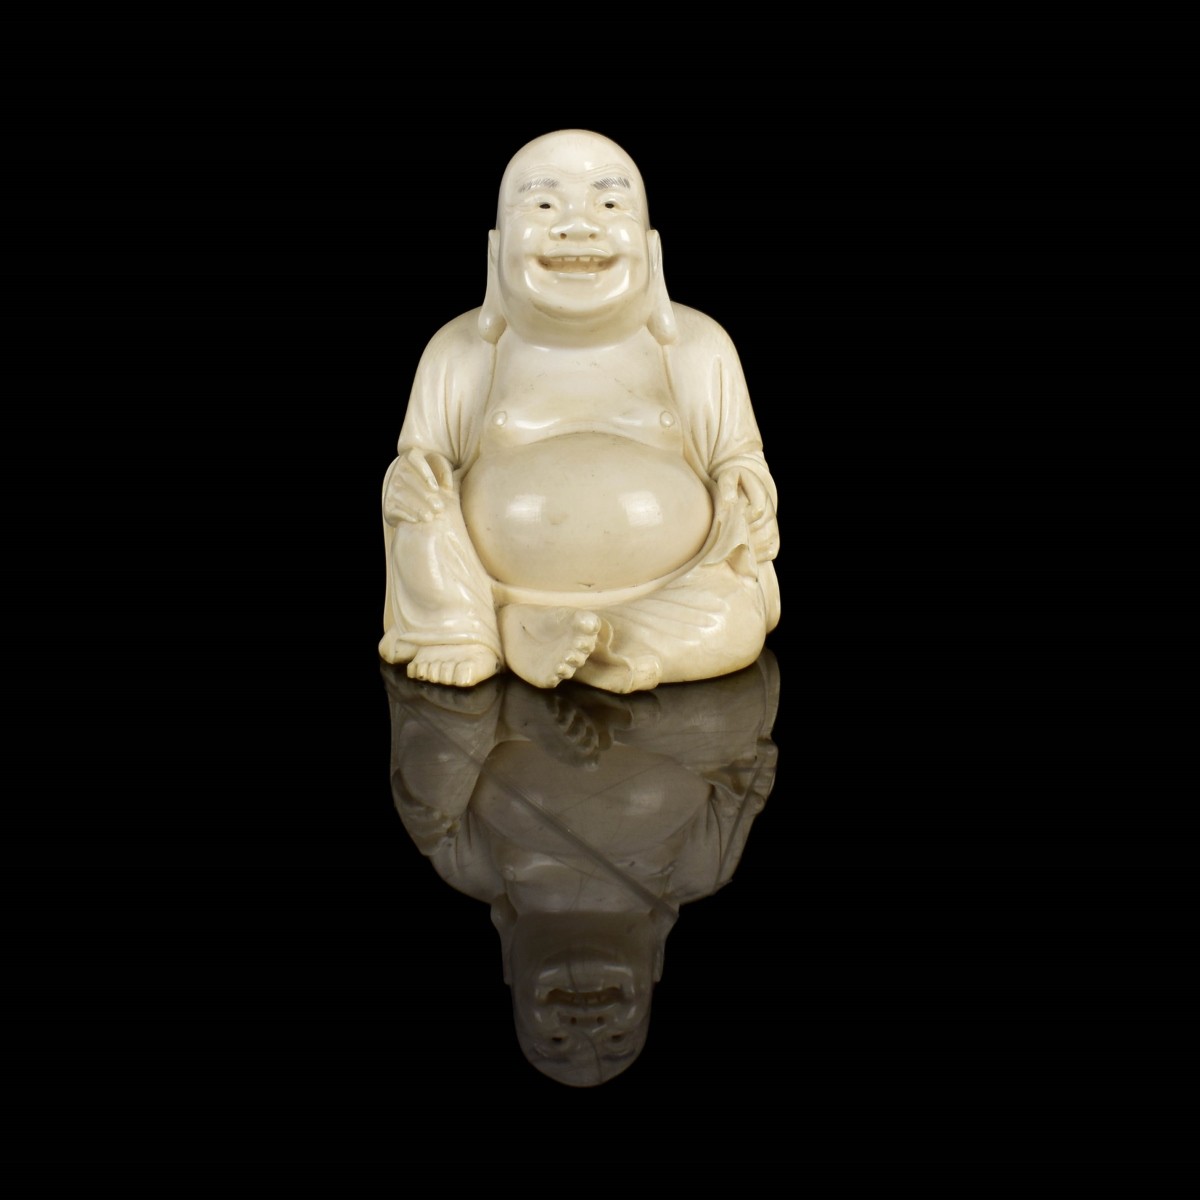 Antique Chinese Happy Buddha Figurine